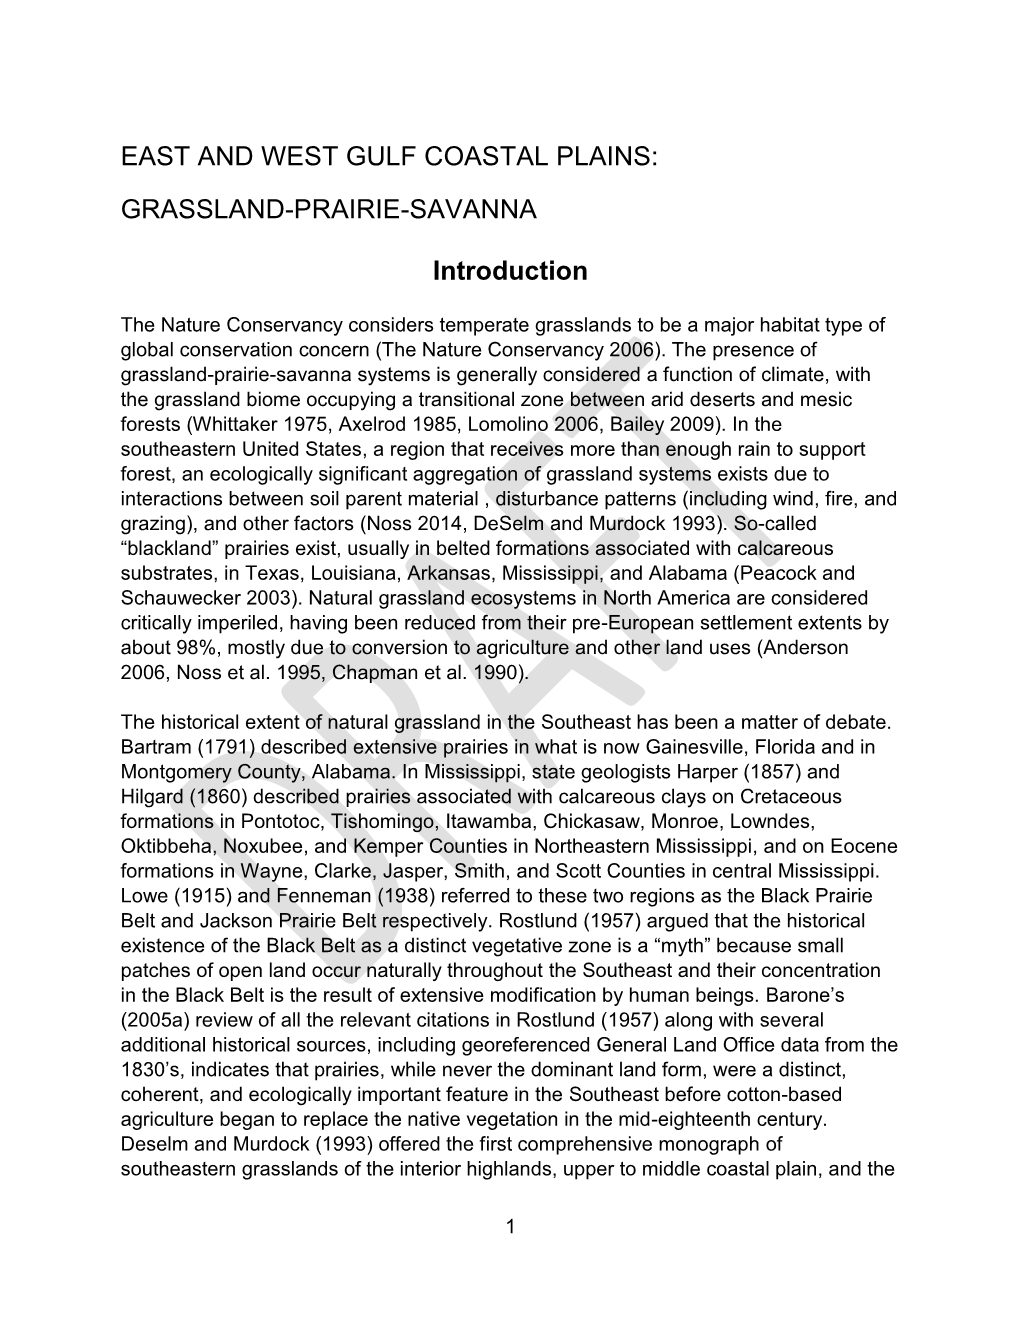 East and West Gulf Coastal Plains: Grassland-Prairie-Savanna